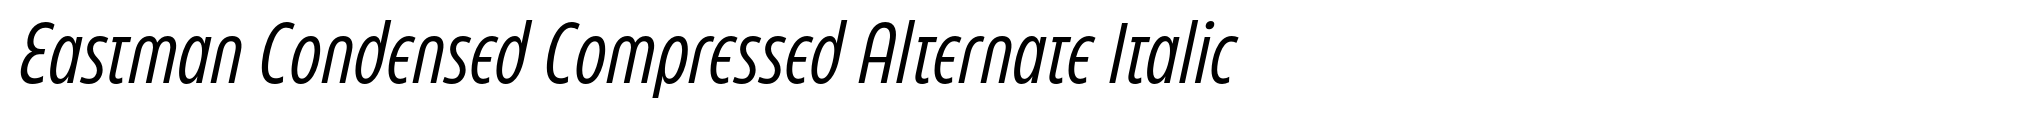 Eastman Condensed Compressed Alternate Italic image